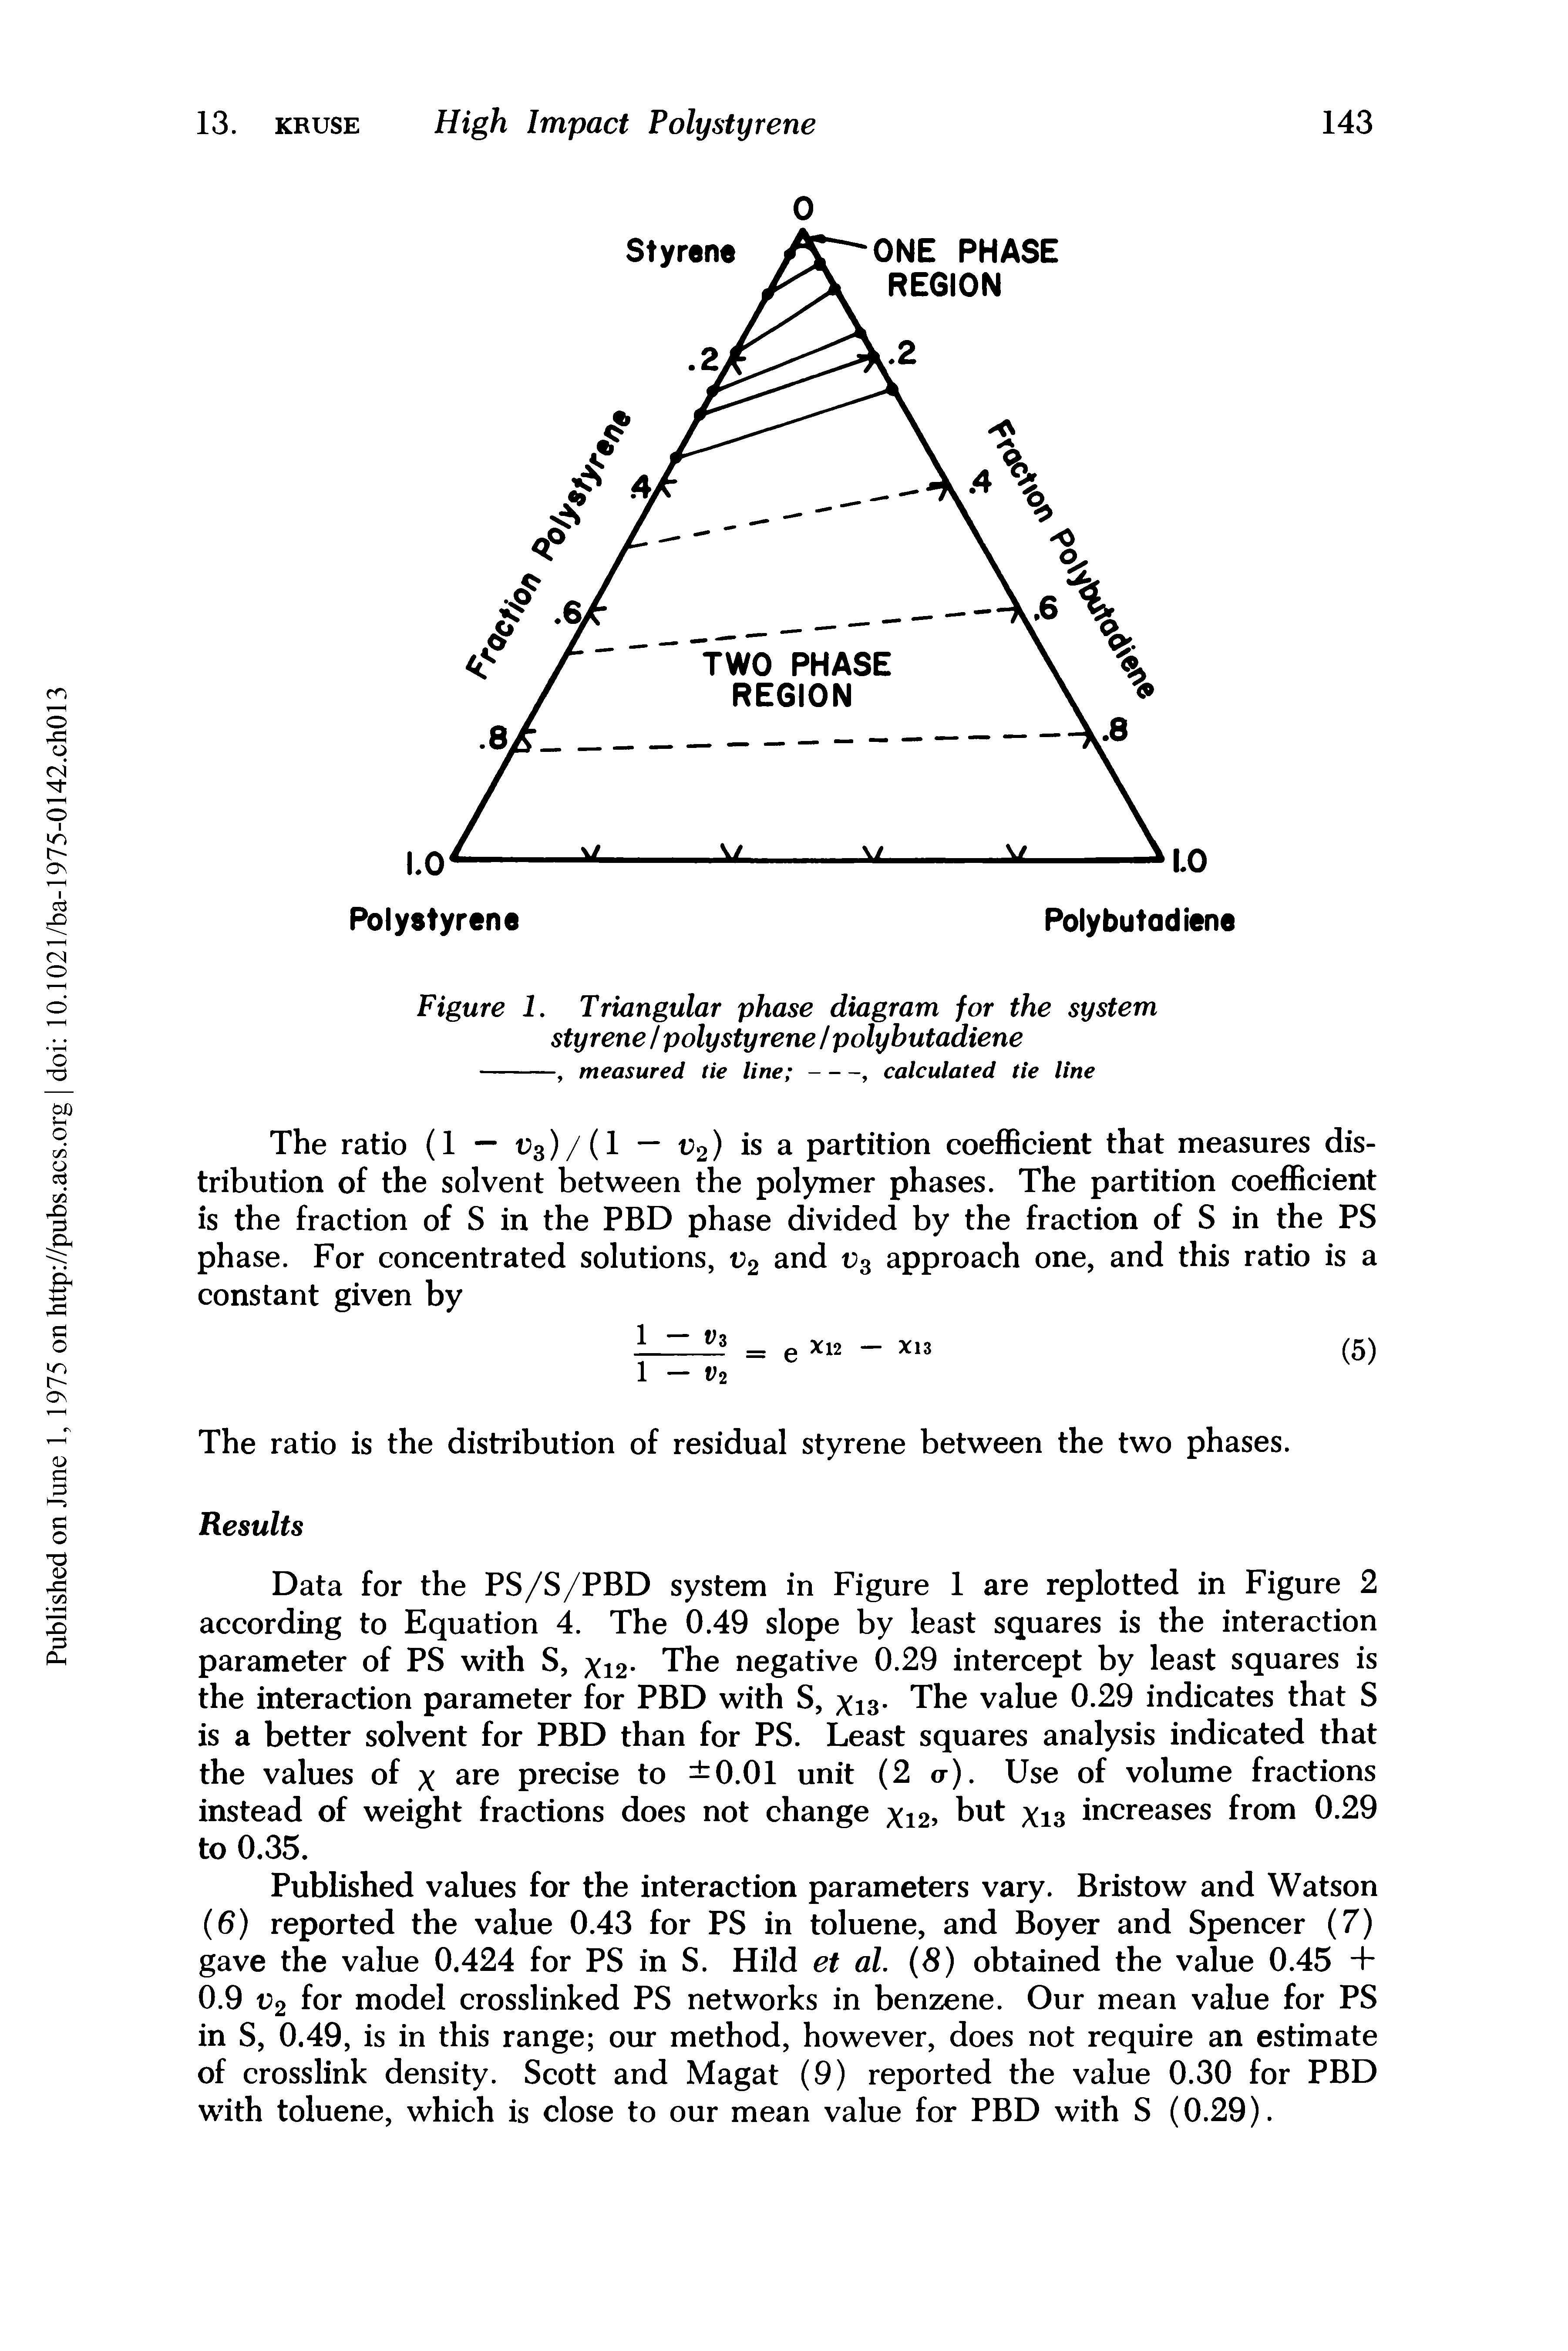 Figure 1. Triangular phase diagram for the system styrene / polystyrene / polybutadiene...